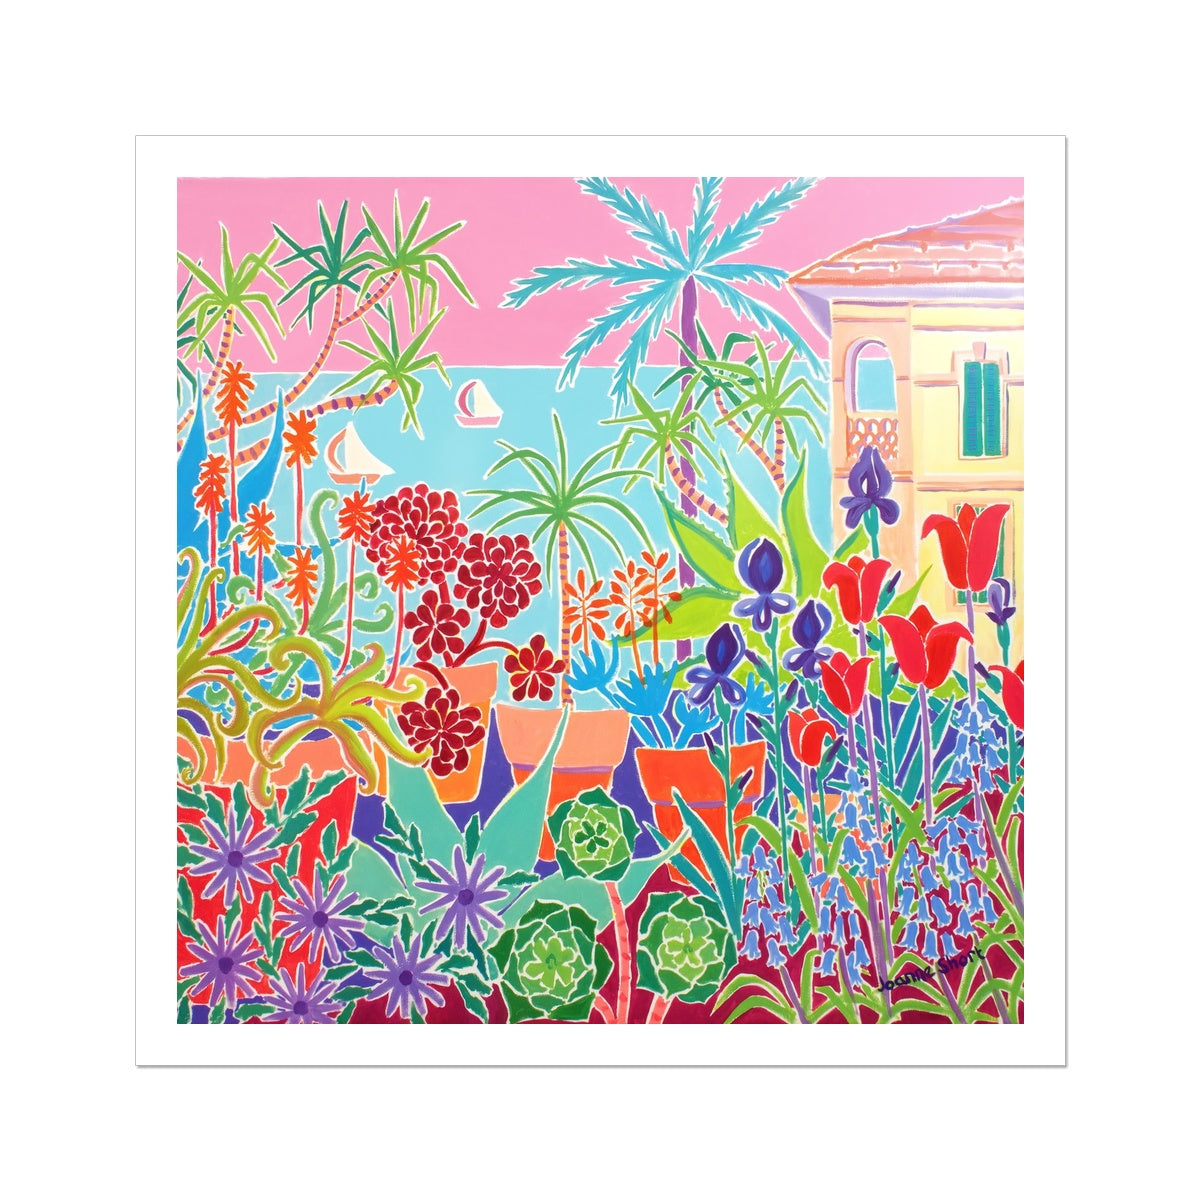 Joanne Short Fine Art Open Edition Art Print. 'Patchwork Flowers and Pink Sky, Clos du Peyronnet, Menton'. French Art Gallery